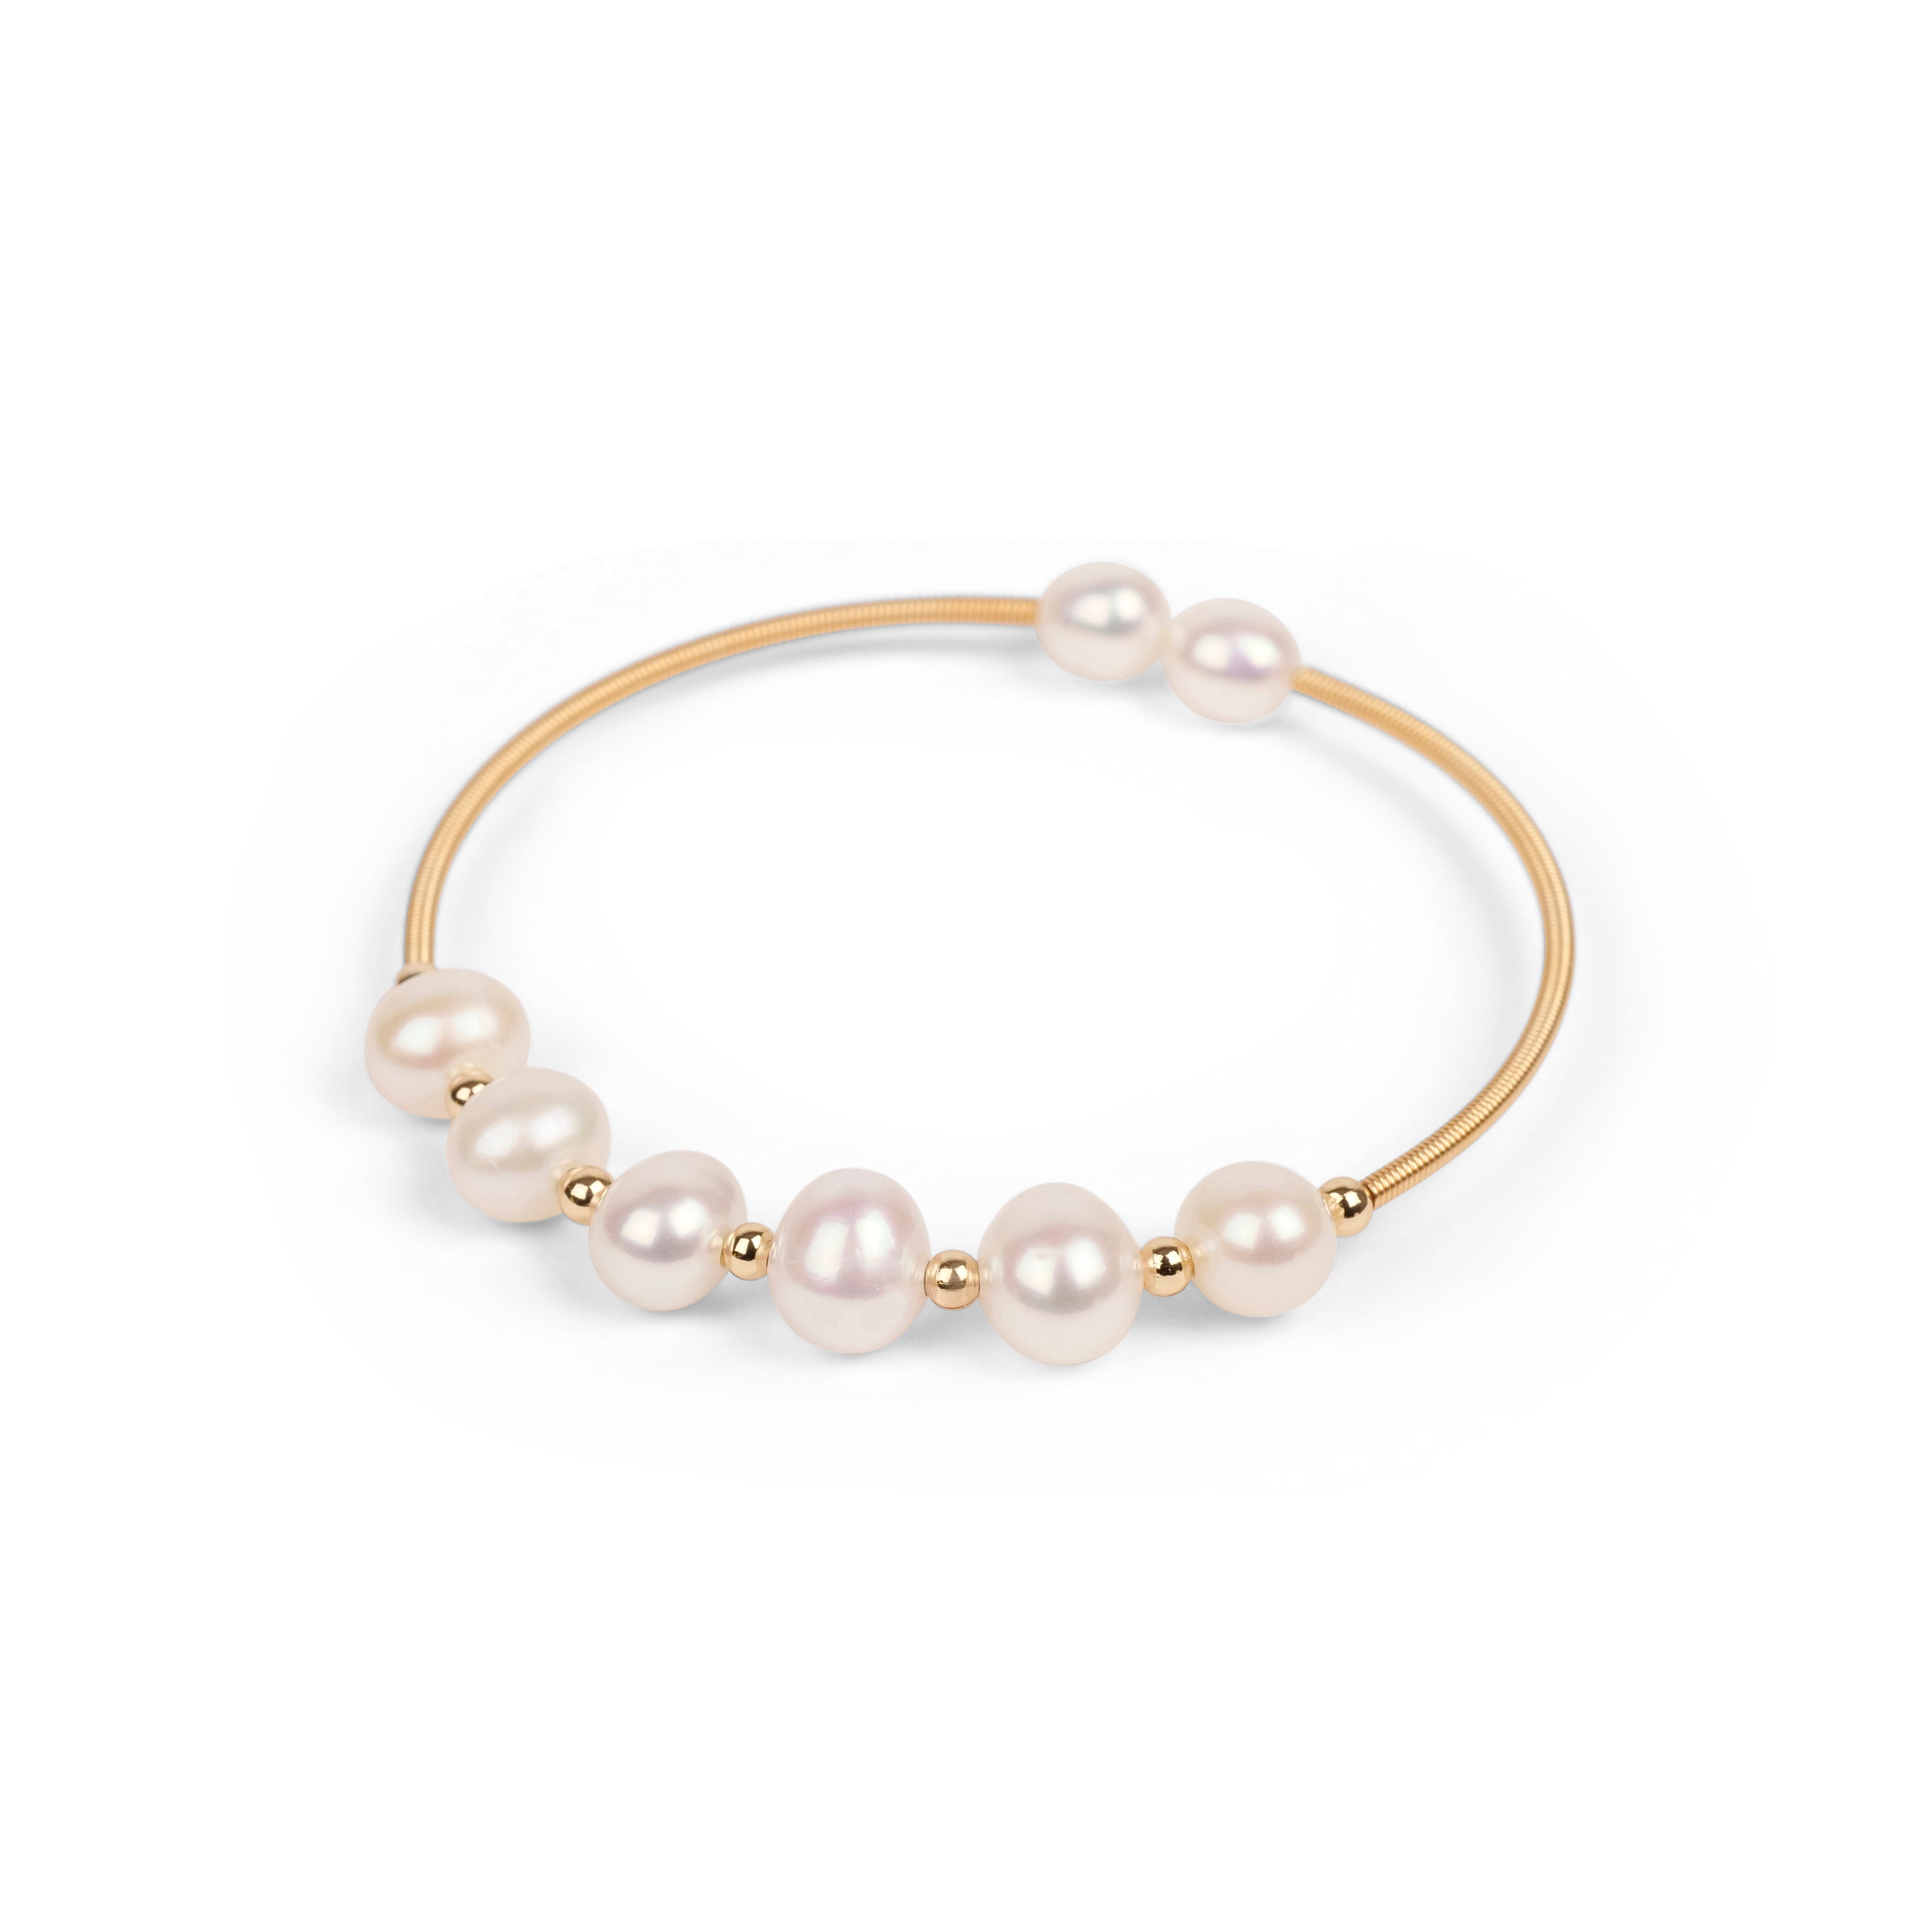 Slip on Bangle Bracelet with White Pearl